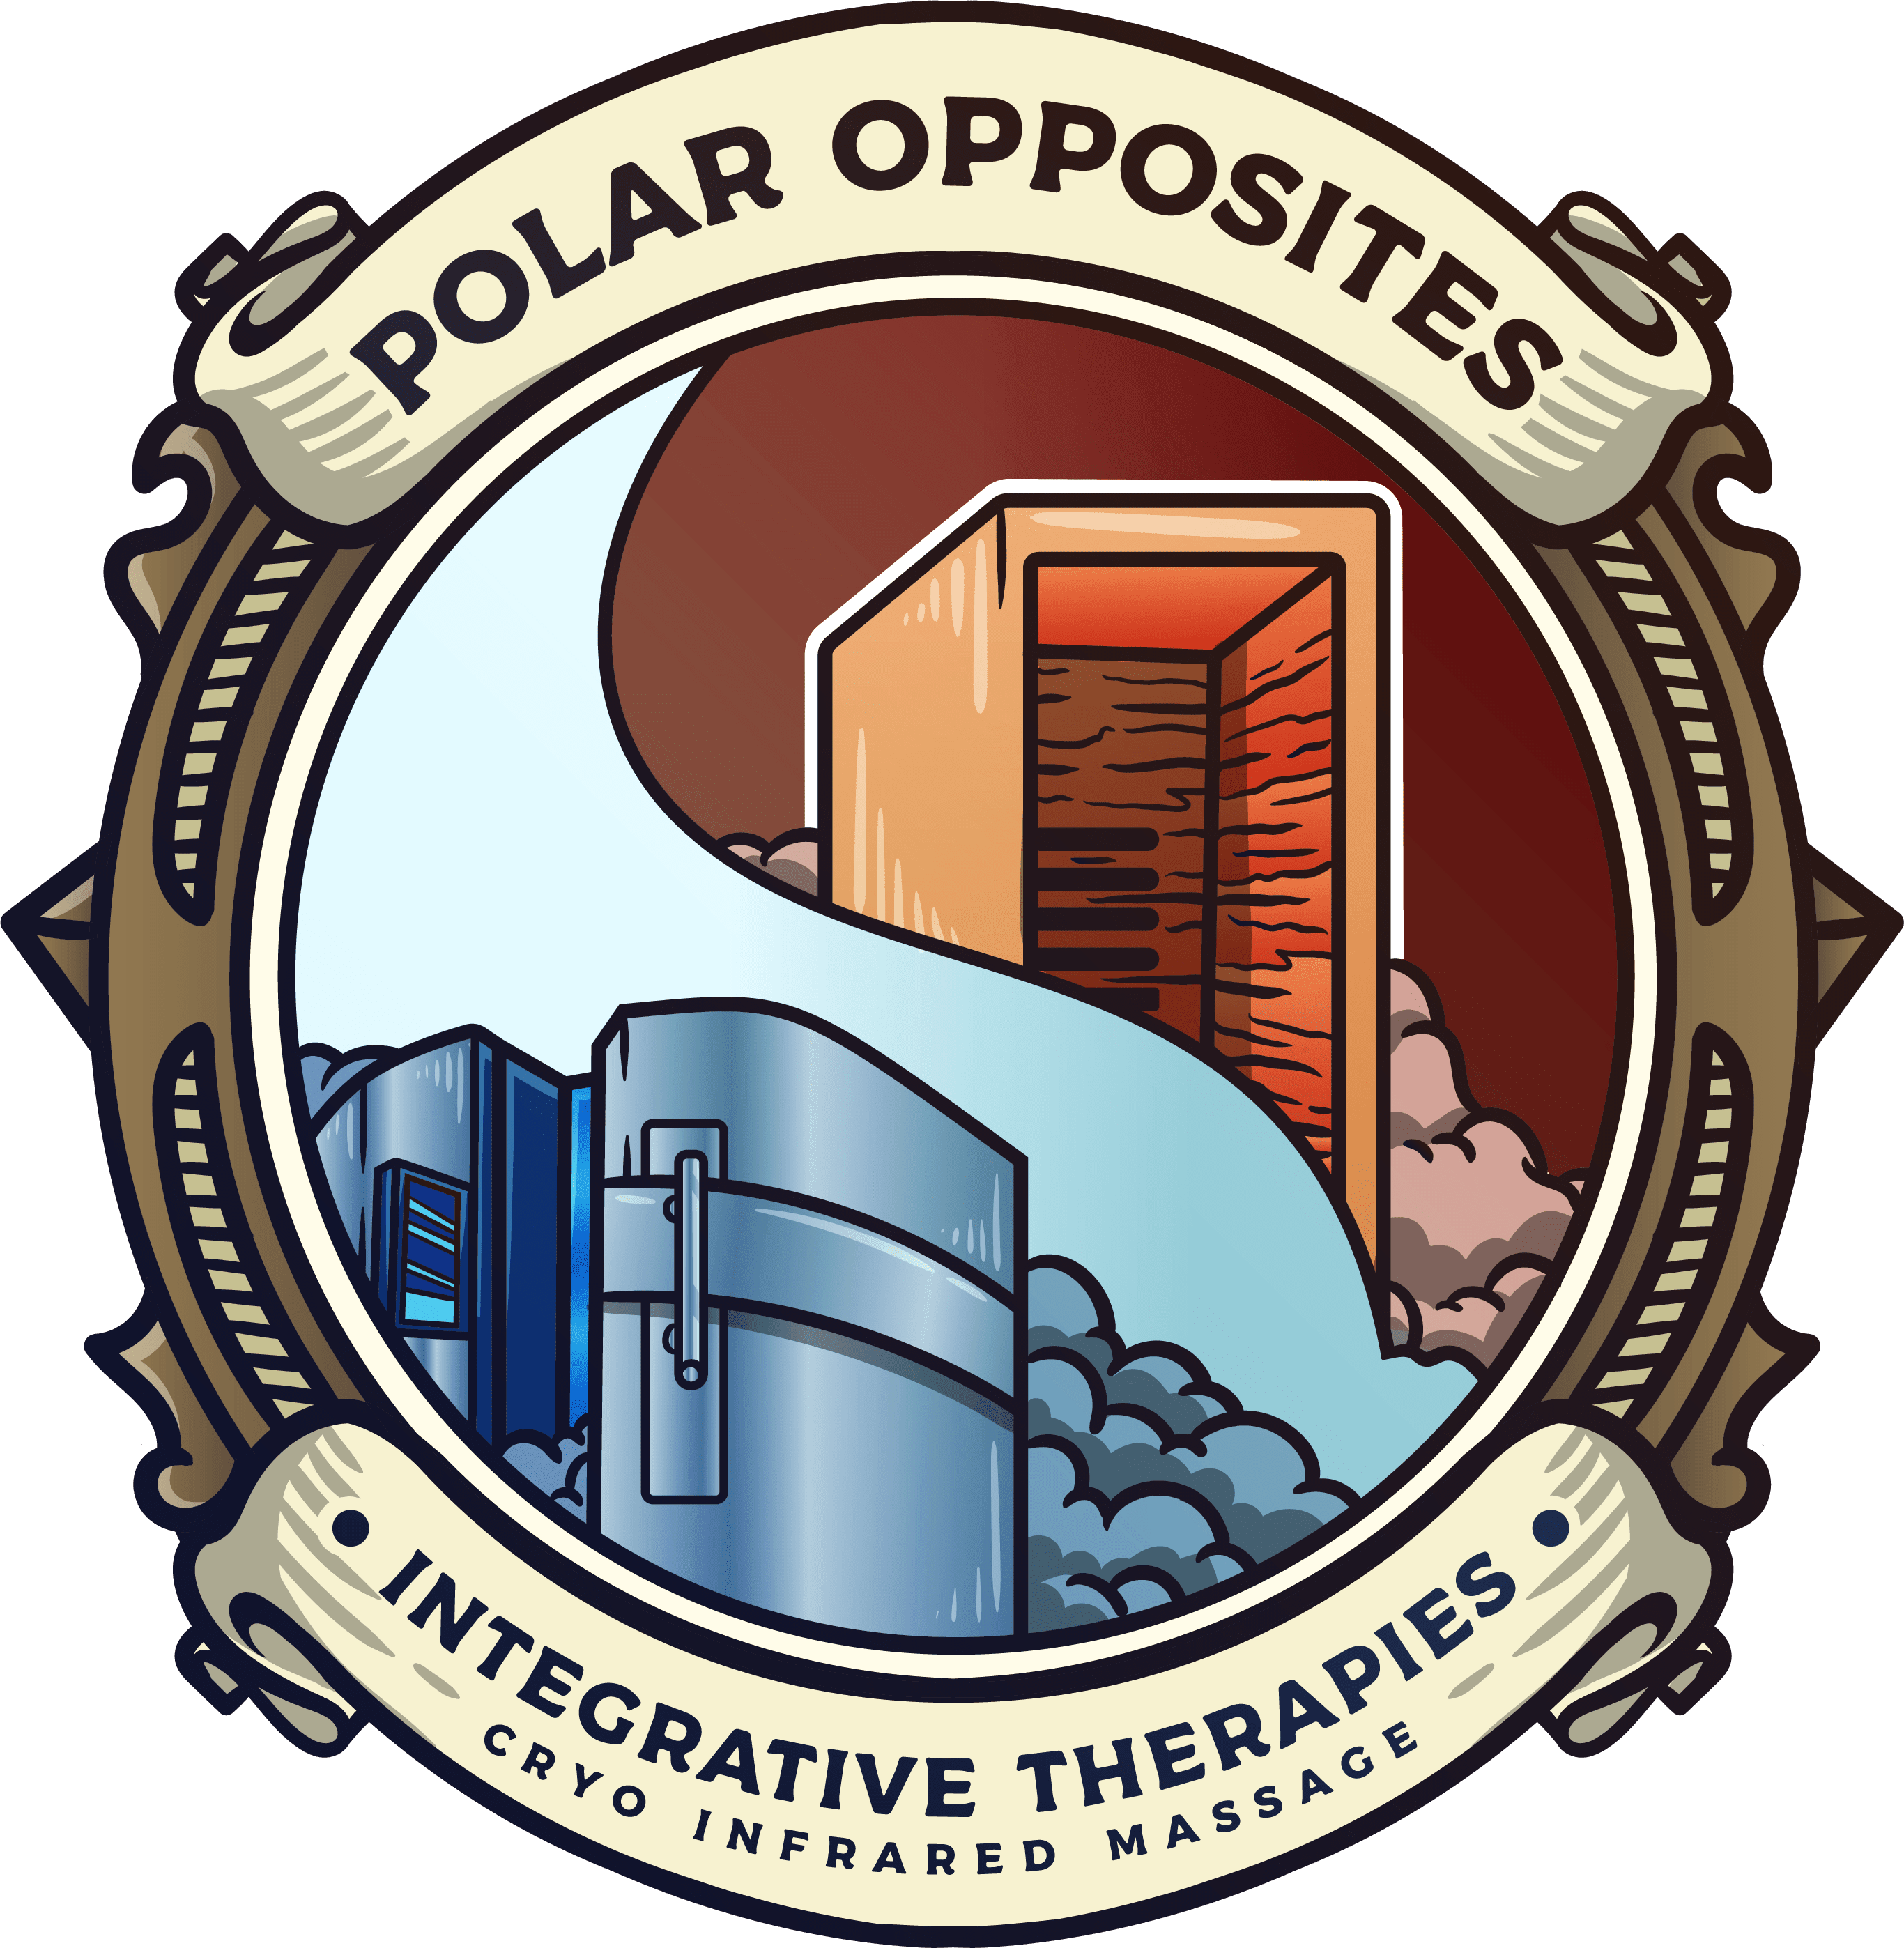 Polar Opposites Integrative Therapies